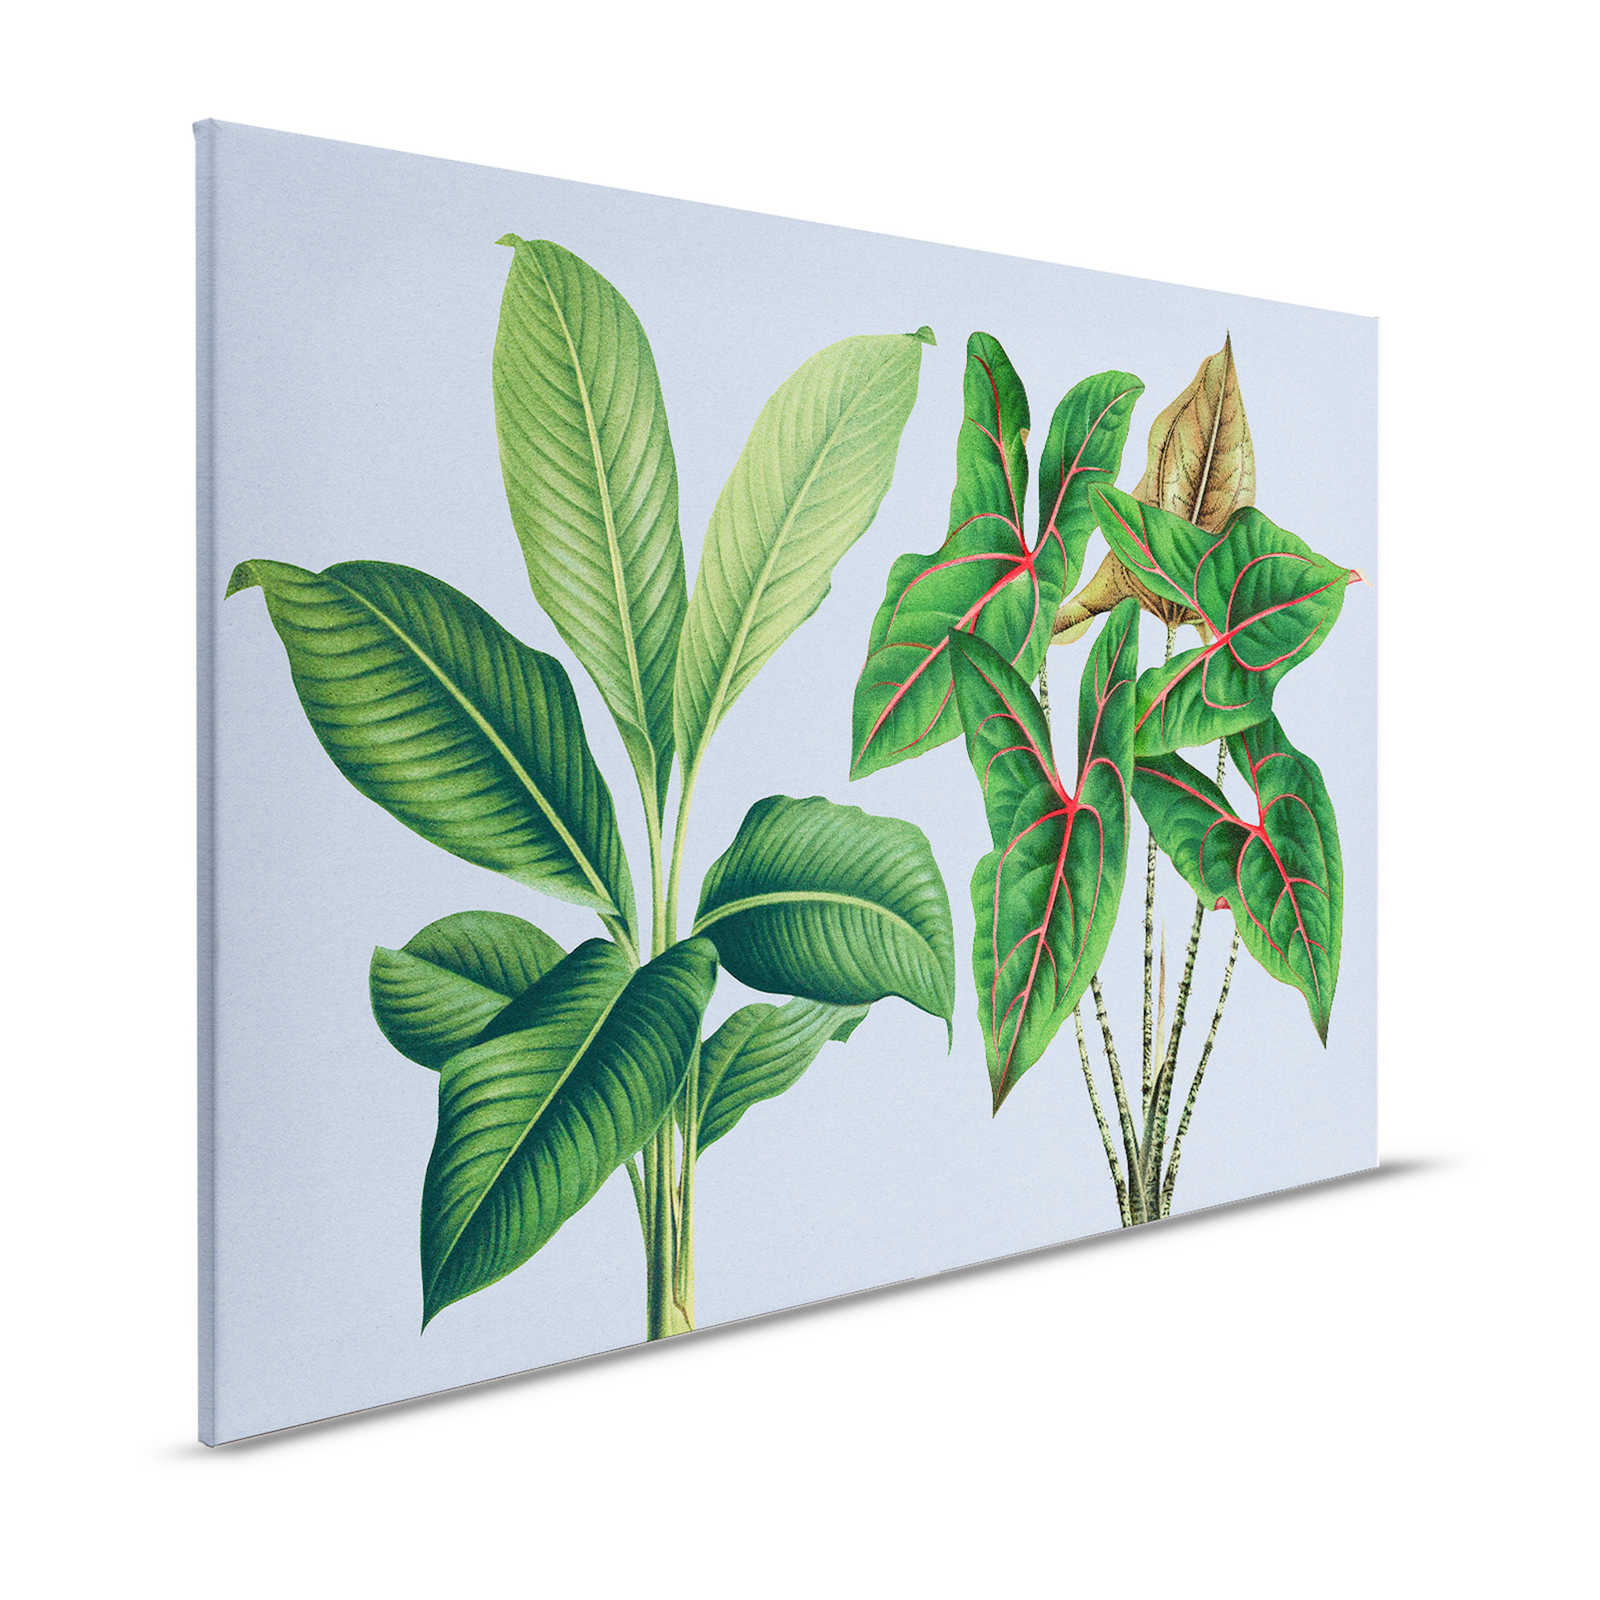 Leaf Garden 1 - Quadro su tela Foglie blu con piante tropicali - 1,20 m x 0,80 m
